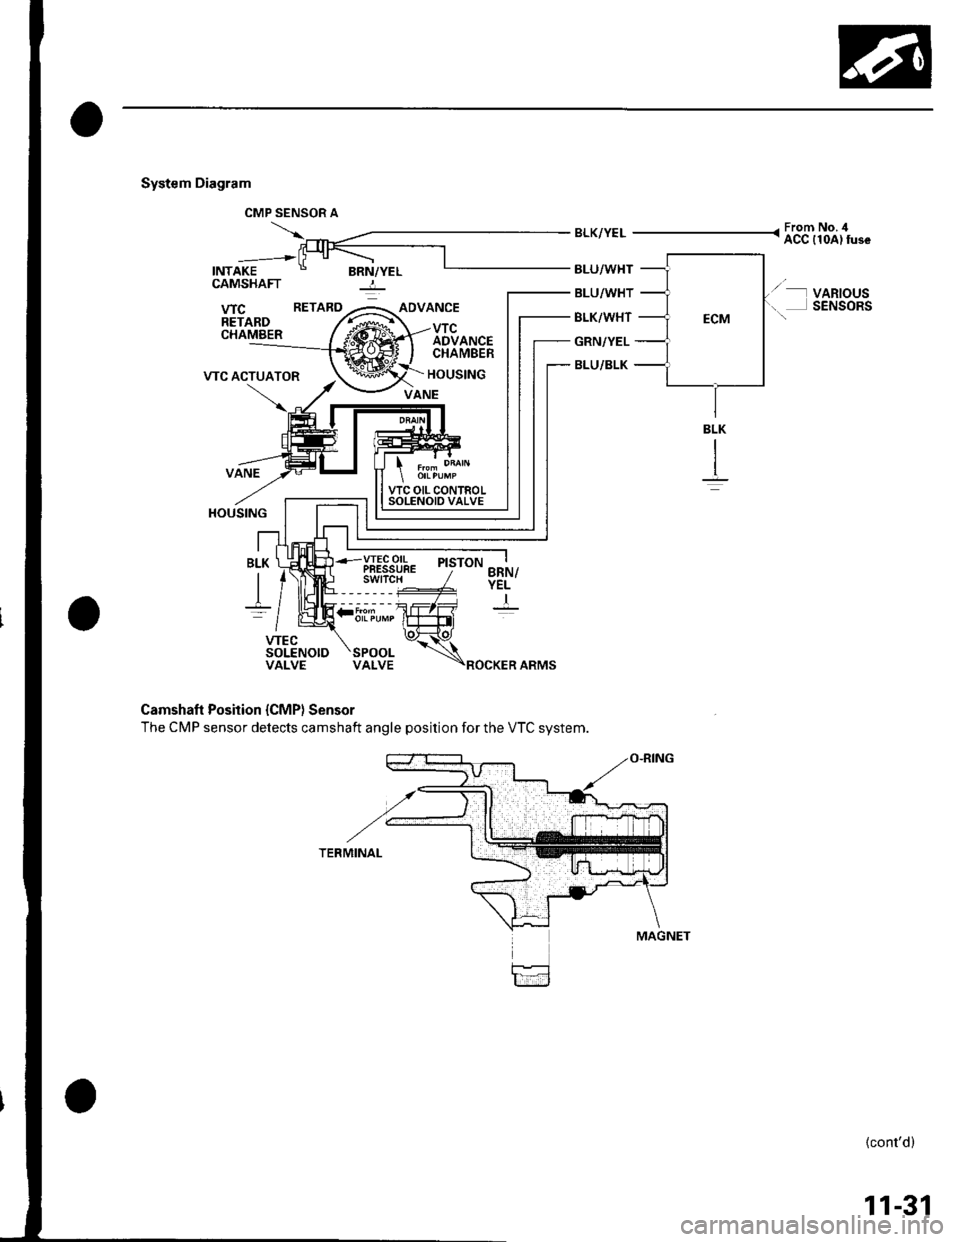 HONDA CIVIC 2002 7.G Workshop Manual System Diagram
INTAKE
CMP SENSOR A
BRN/YELBLU/WHT
BLU/WHT
BLK/WHT
GRN/YEL
BLU/BLK
From No. ilACC {10A) fuse
VARIOUSSENSORS
CAMSHAFT -:-
BLK
It
Camshaft Position {CMP} Sensor
The CMP sensor detects cam